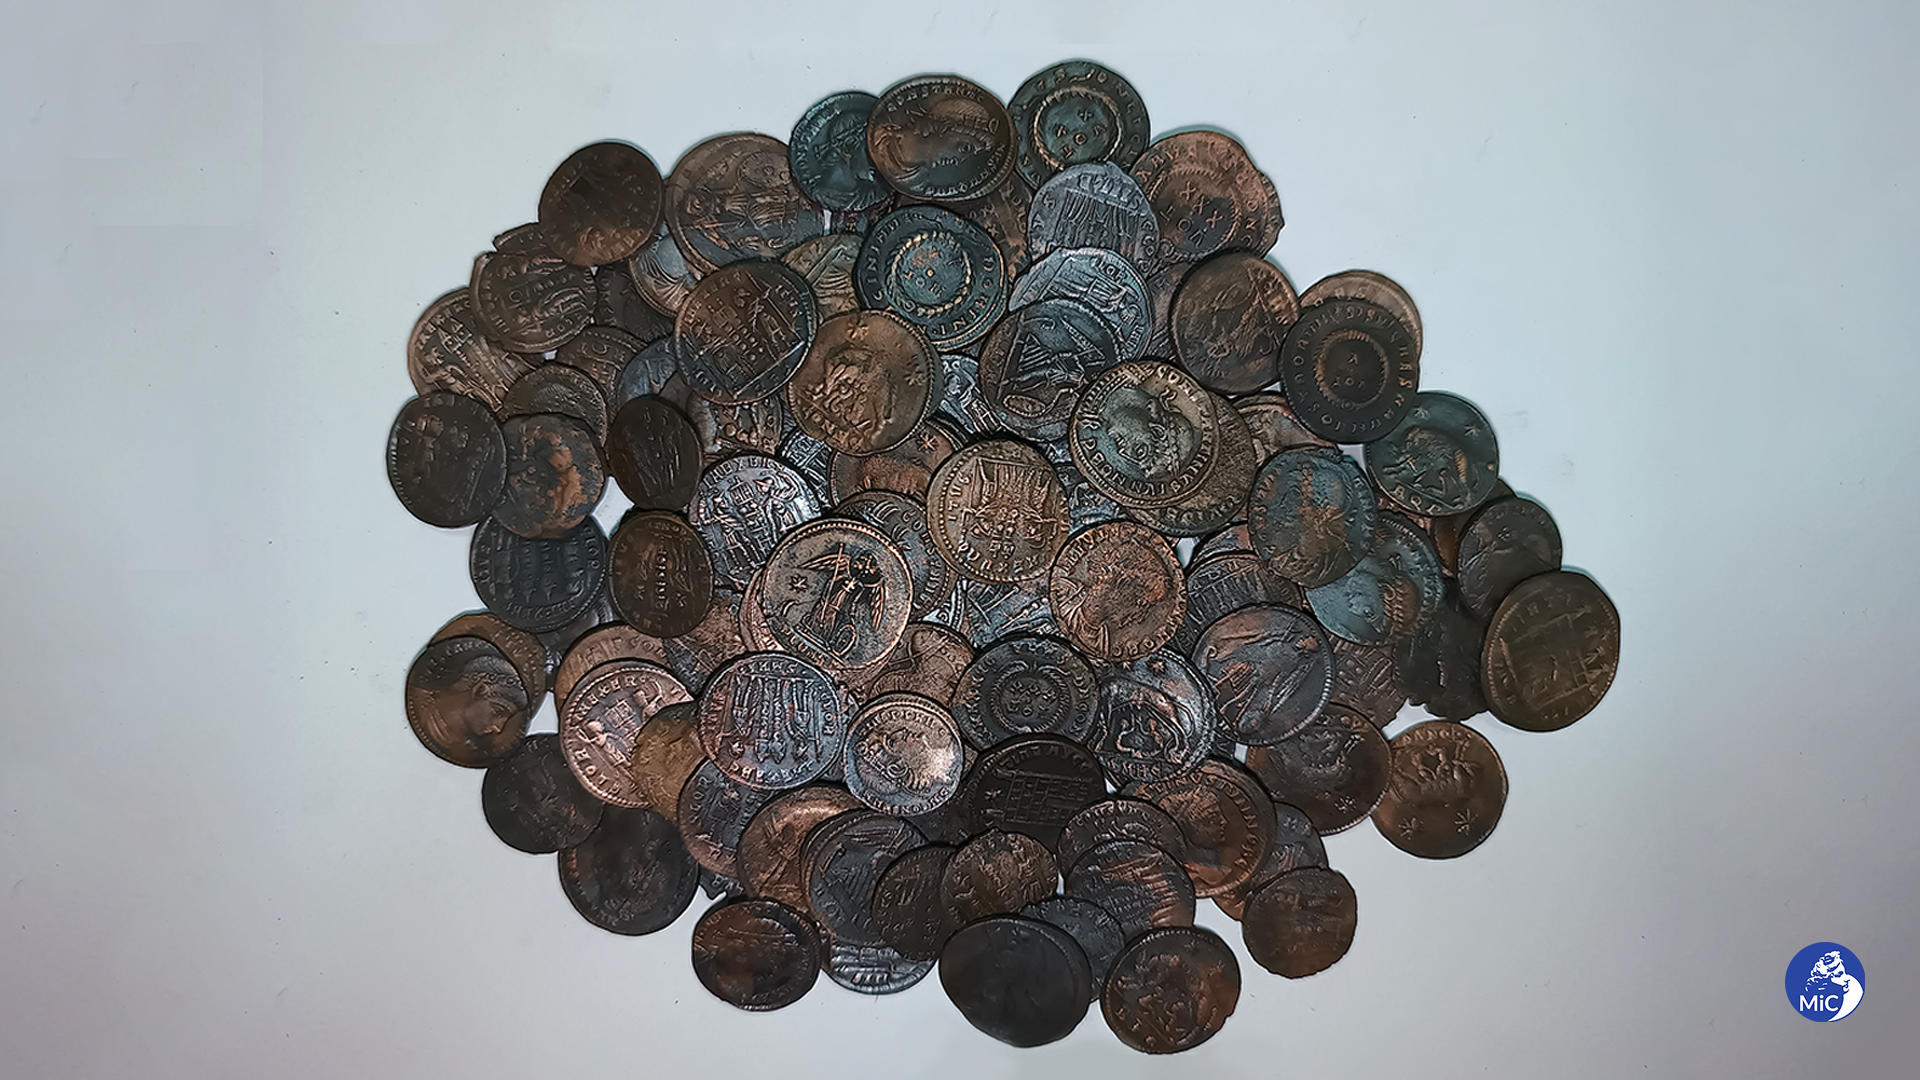 Arqueólogos descubren cerca de 50 mil monedas de bronce del siglo IV d.C.